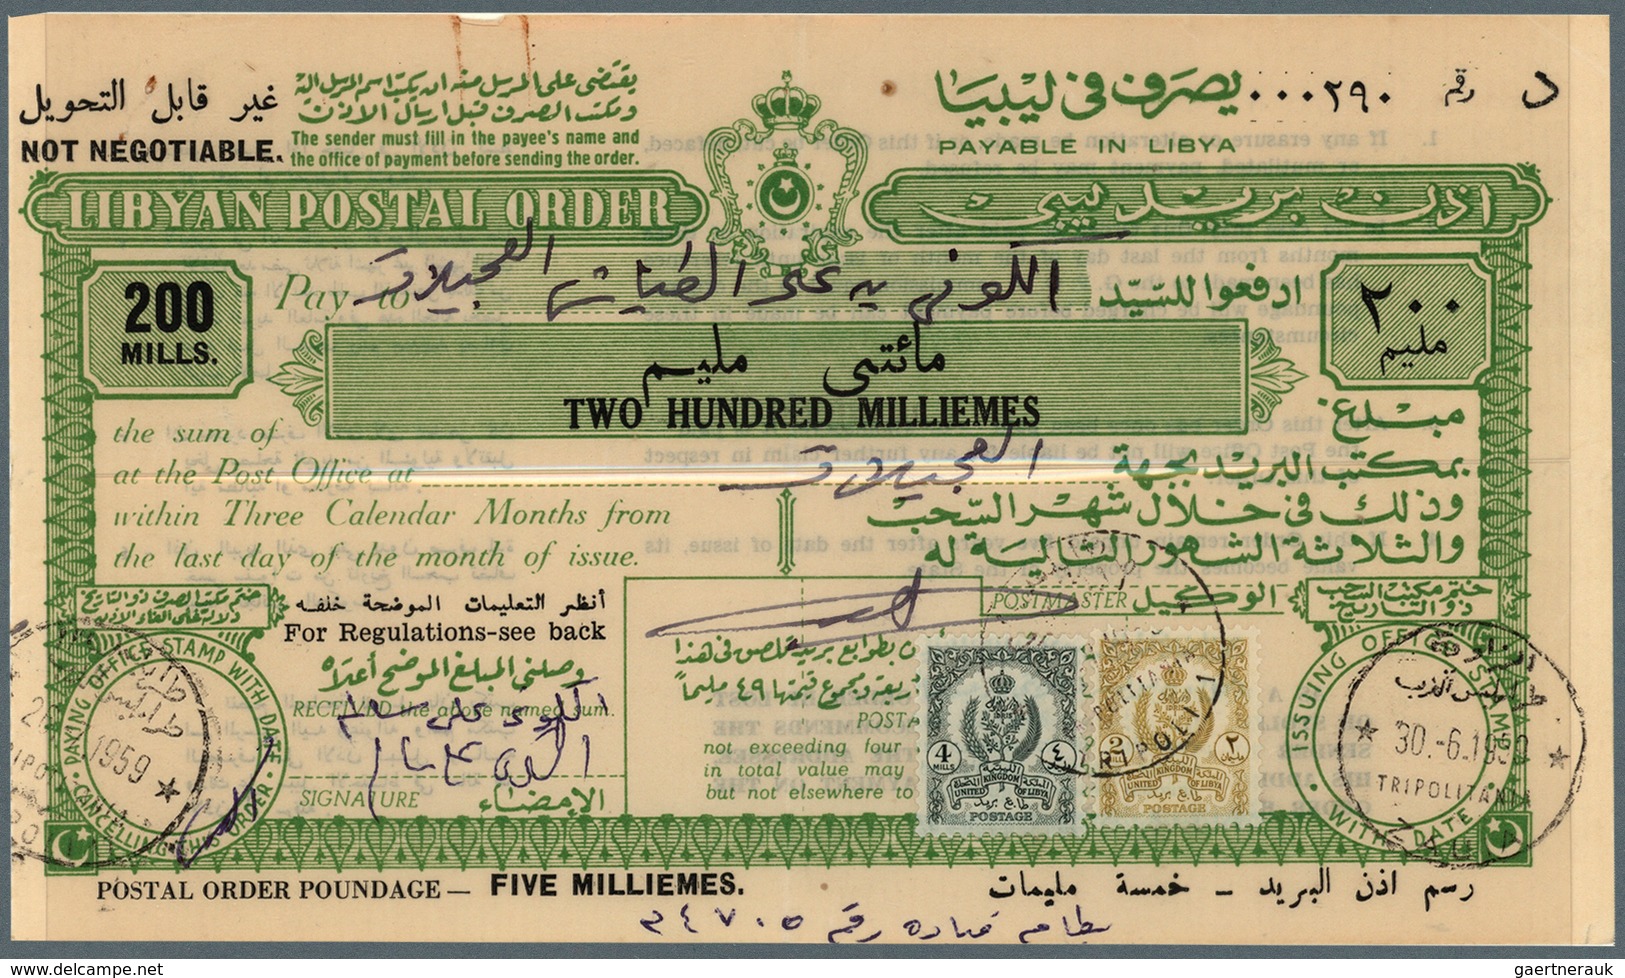 Libyen: 1957 - 1959, wonderful lot of Libyan postal stationerys - Postal Orders - from 100 milliemès